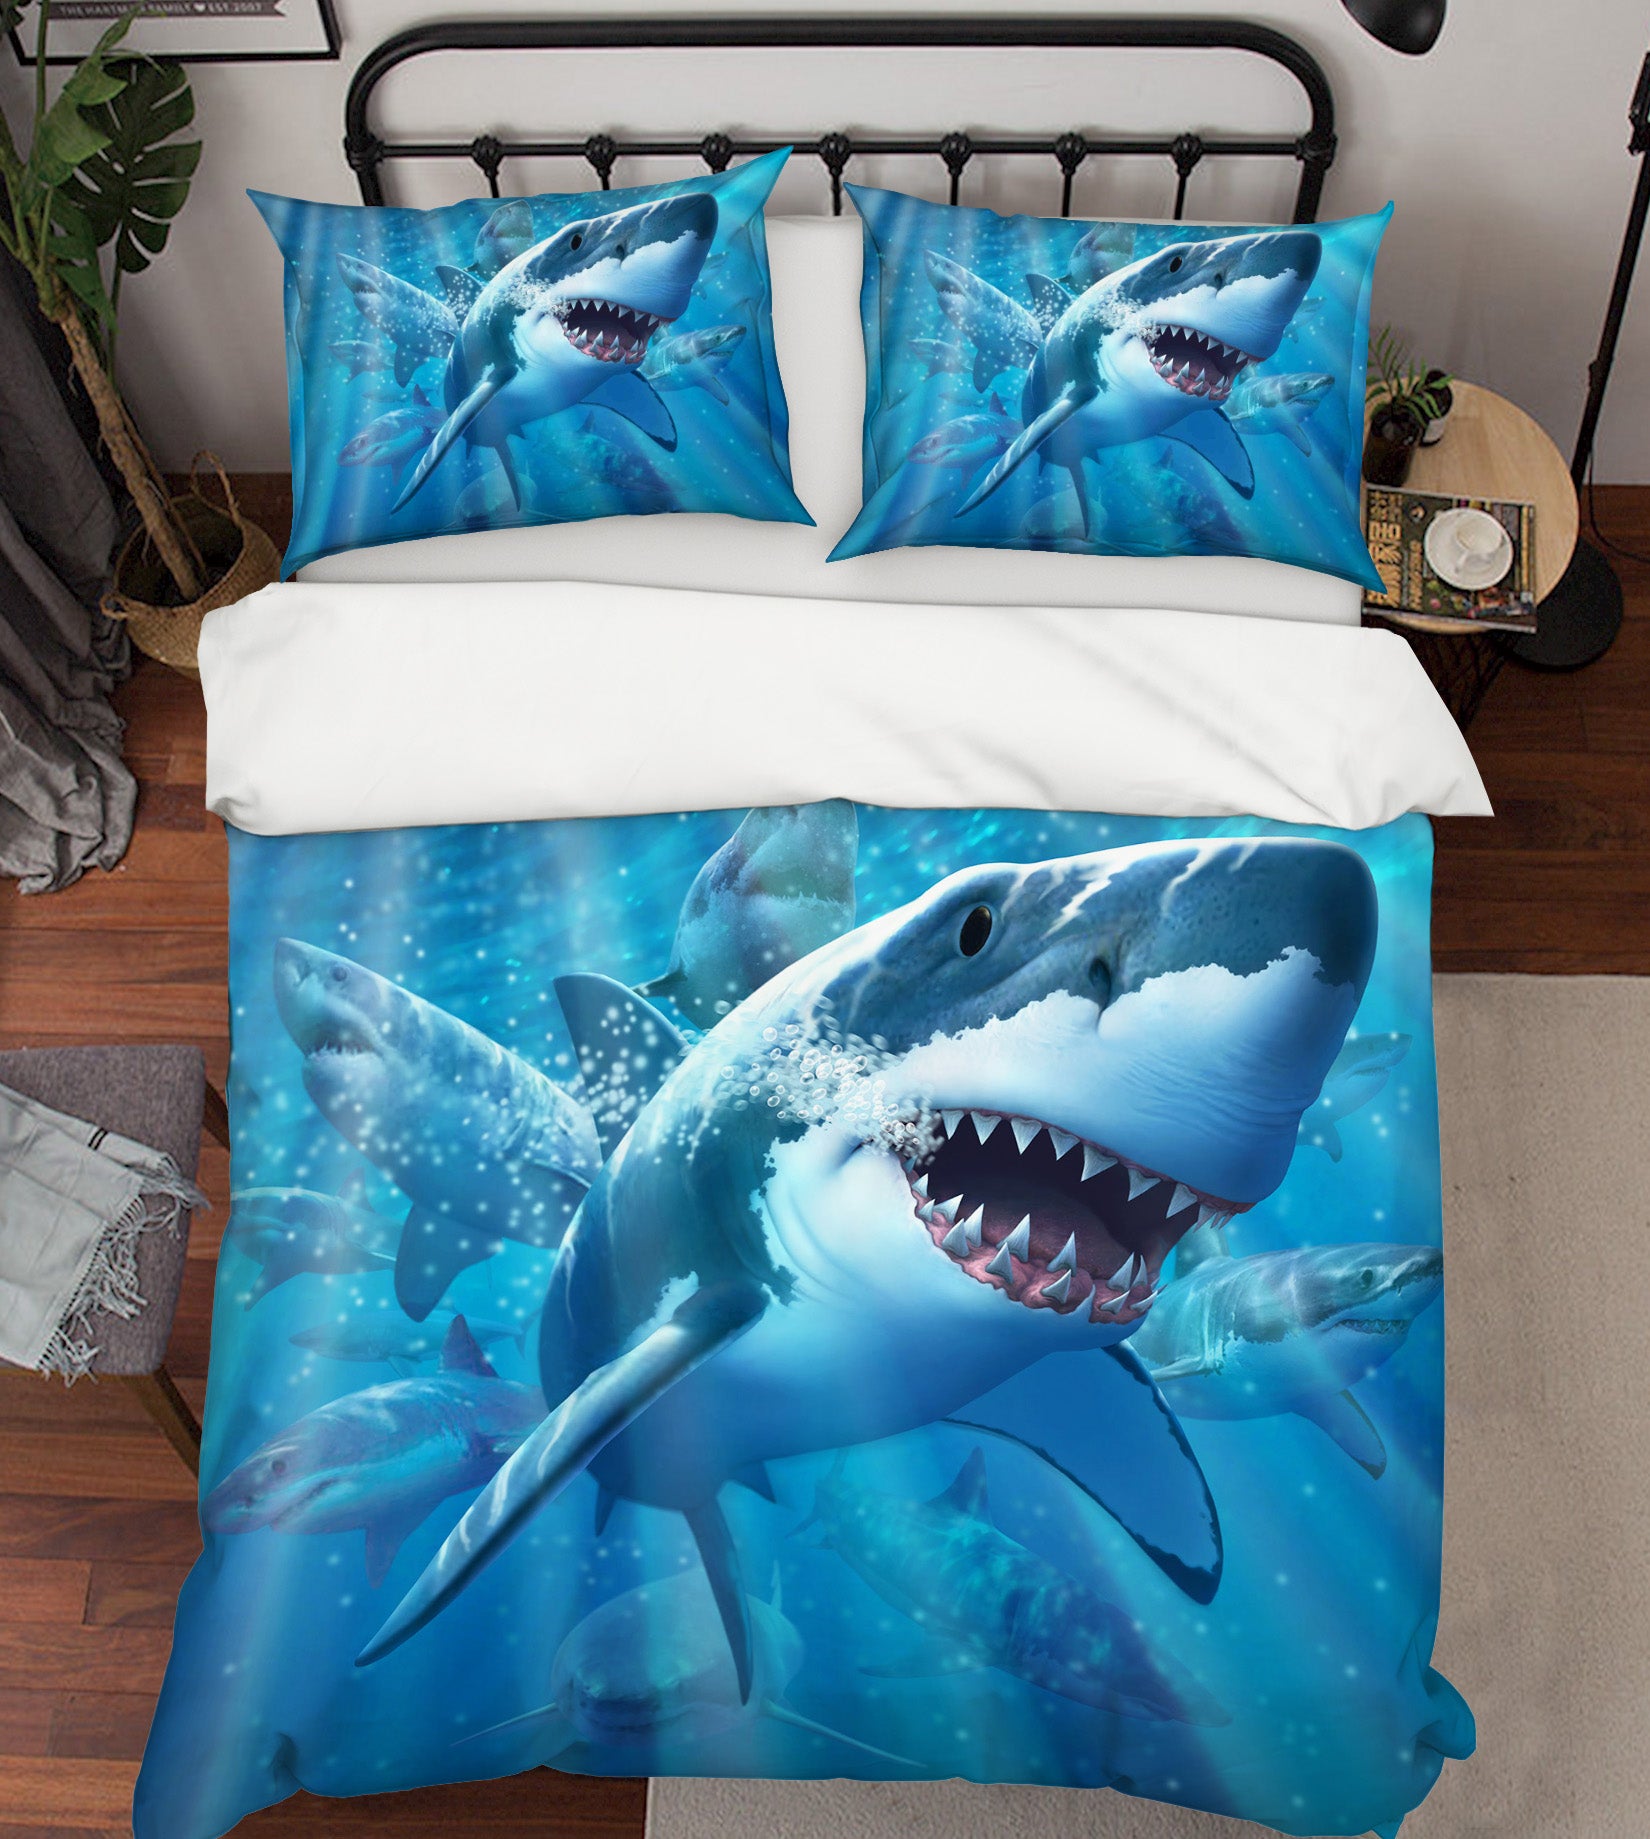 3D Great White Shark 2106 Jerry LoFaro bedding Bed Pillowcases Quilt